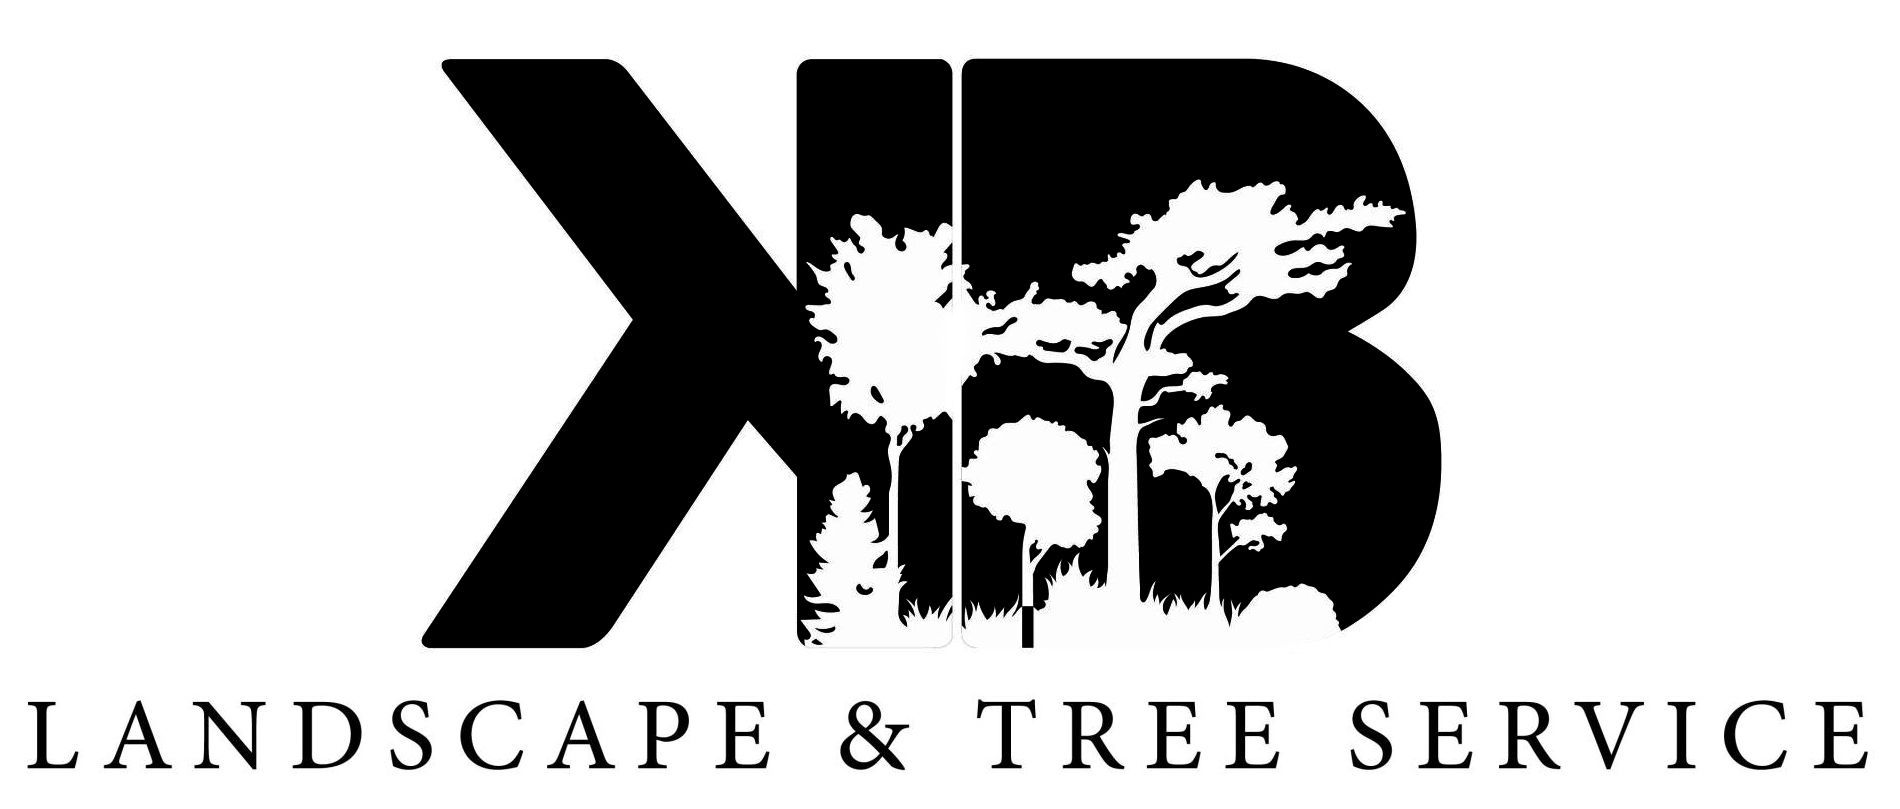 KB Landscape & Tree Service logo